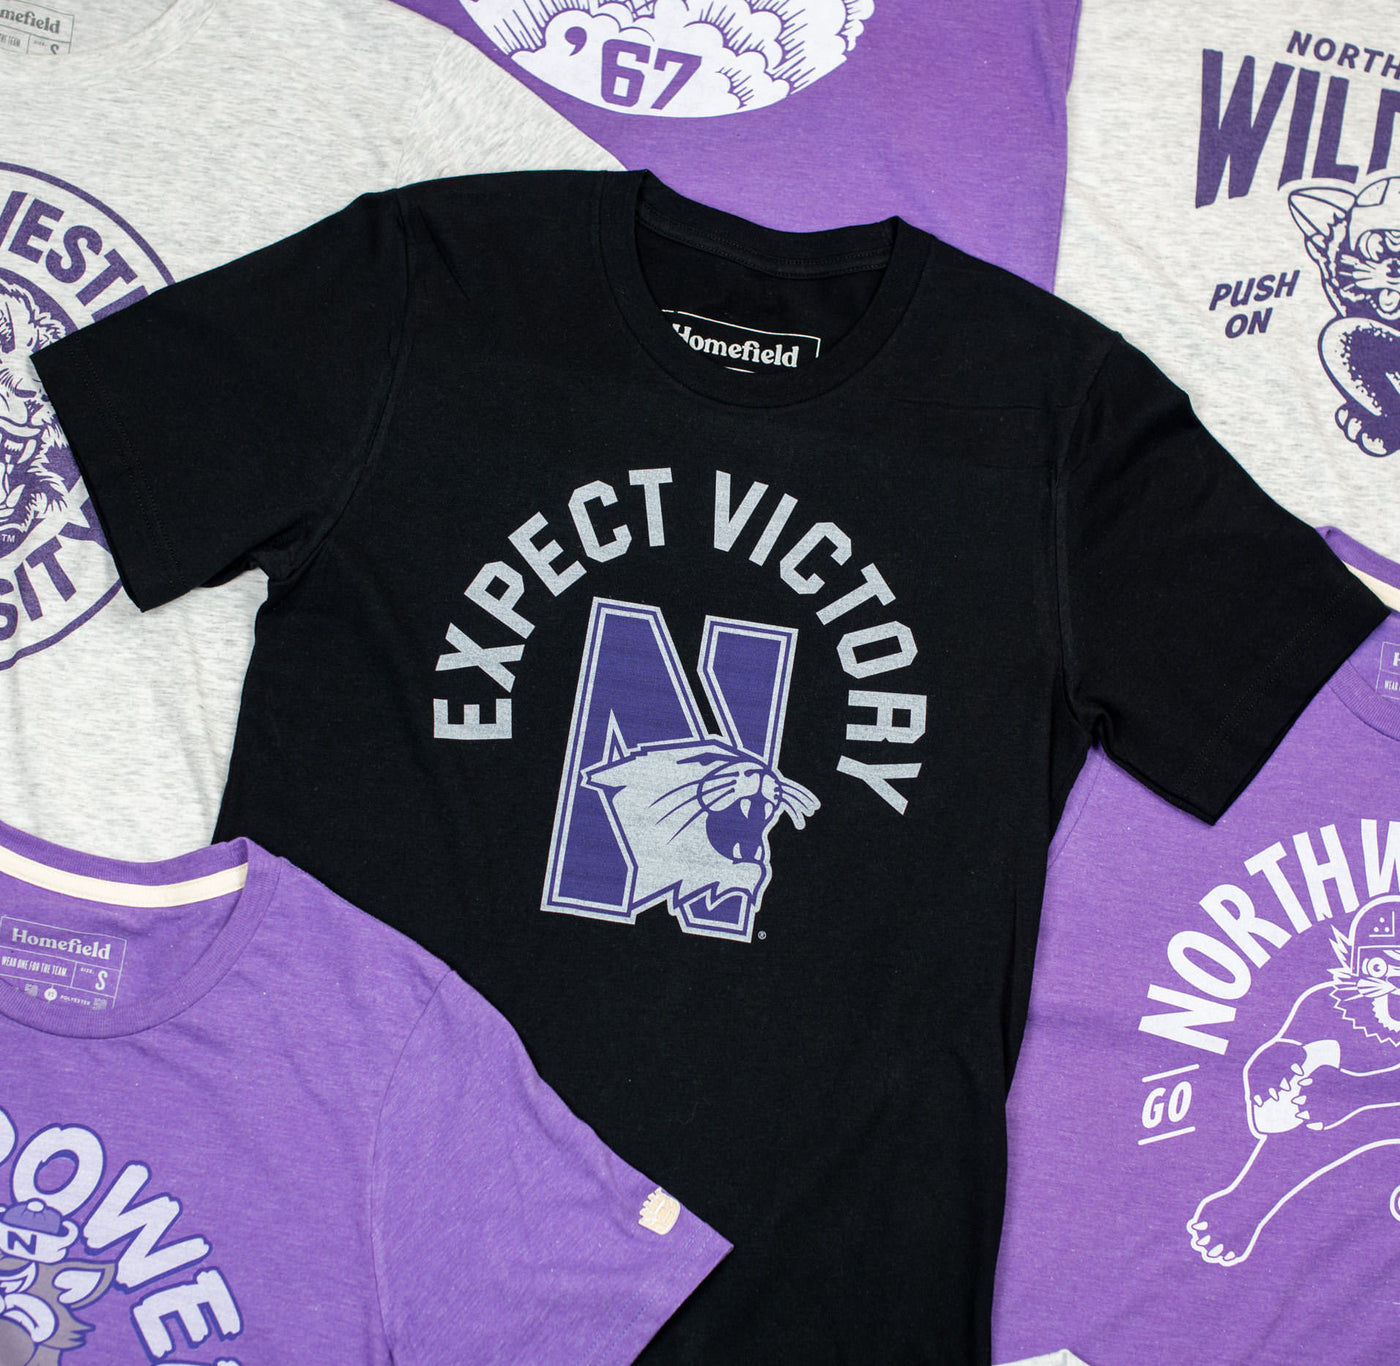 Retro 1995 Northwestern “Expect Victory” Football Tee